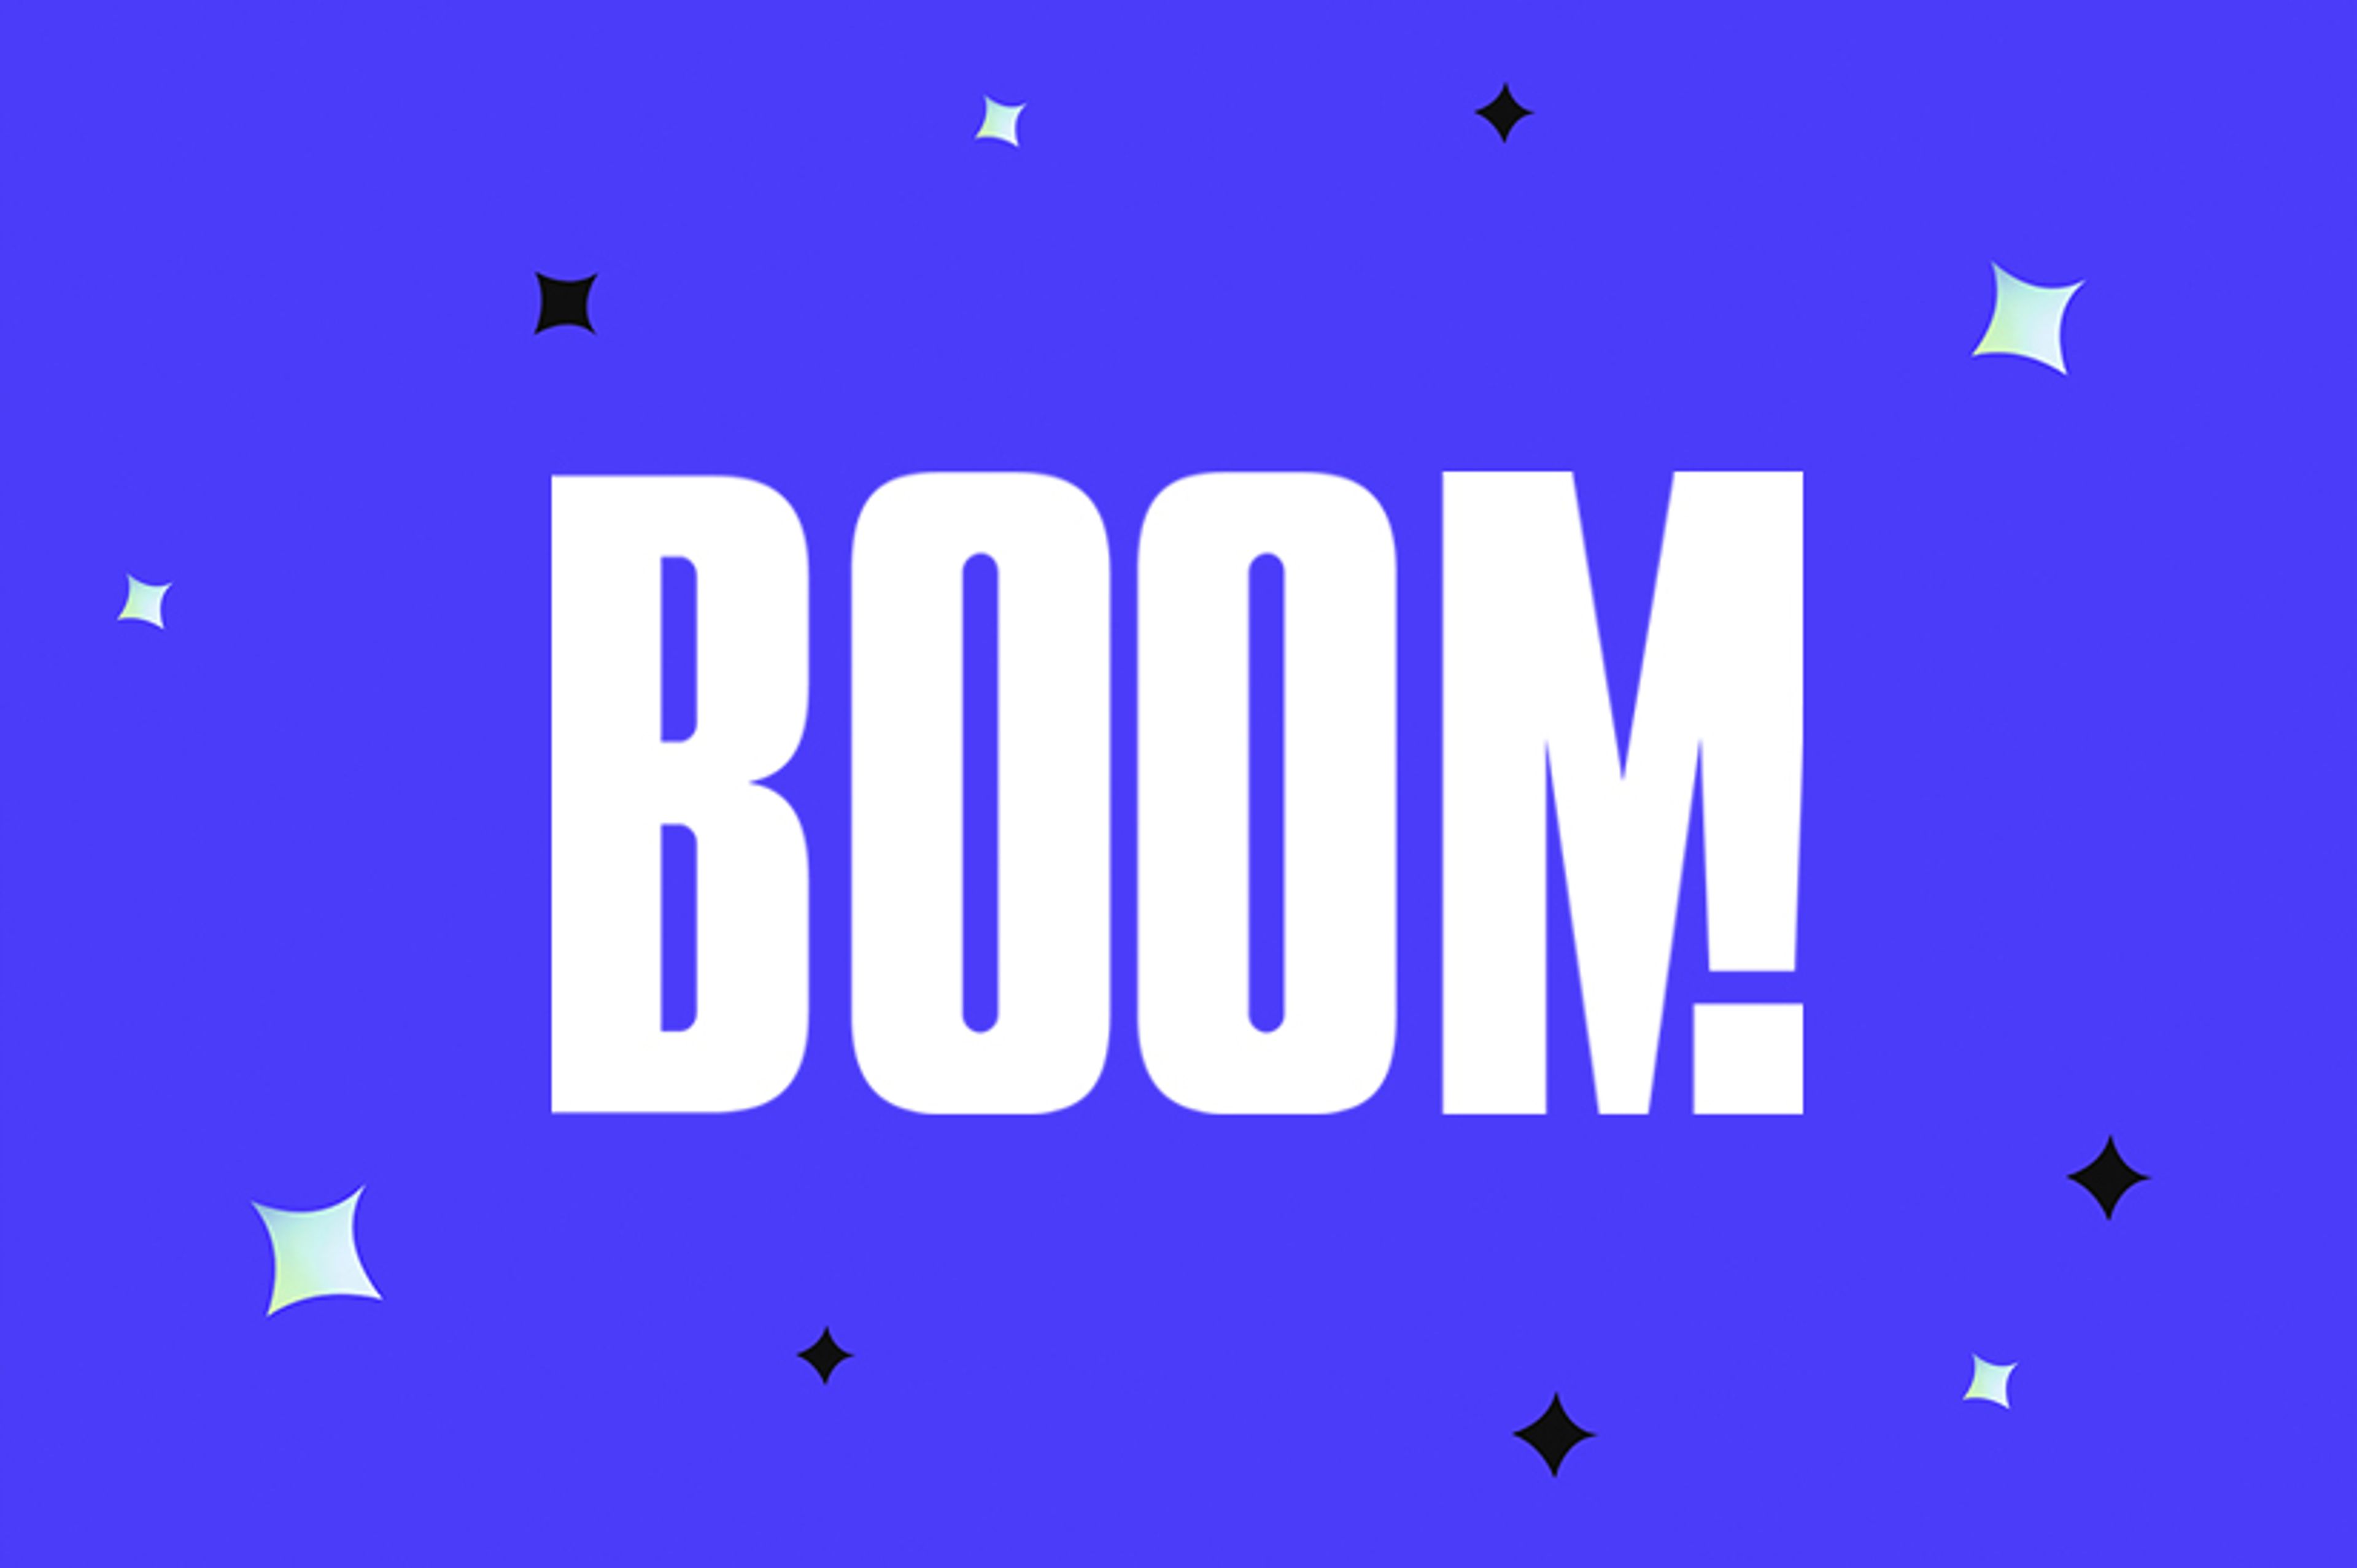 Boom logo against a purple background